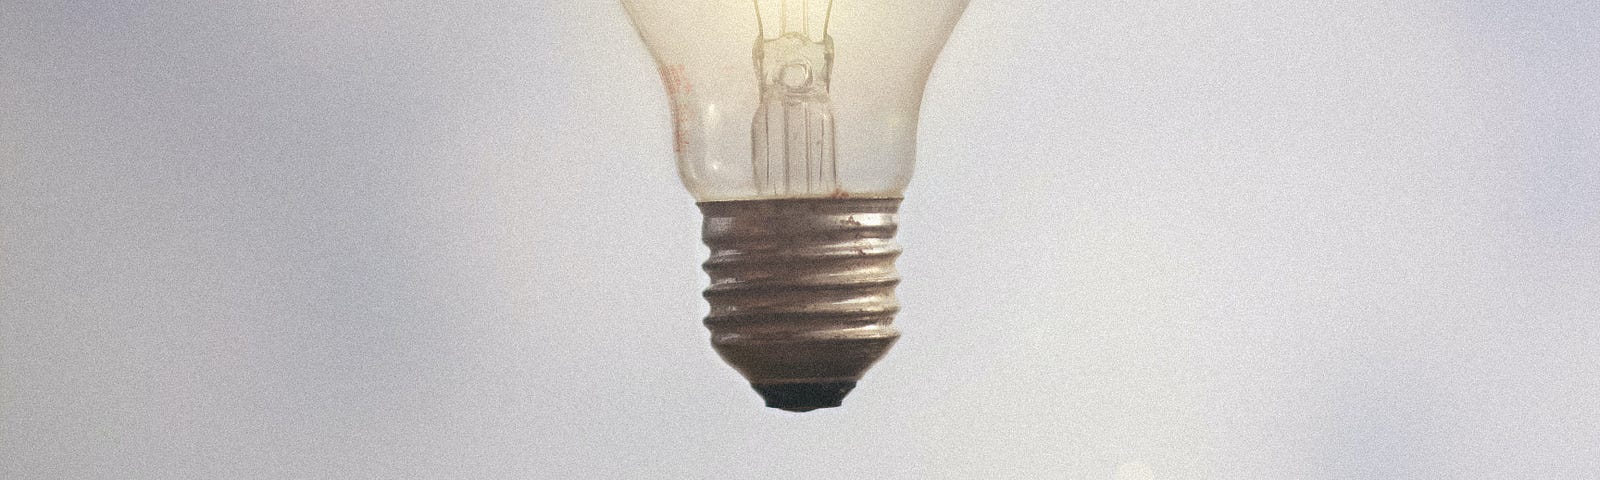 Lightbulb floating above a hand